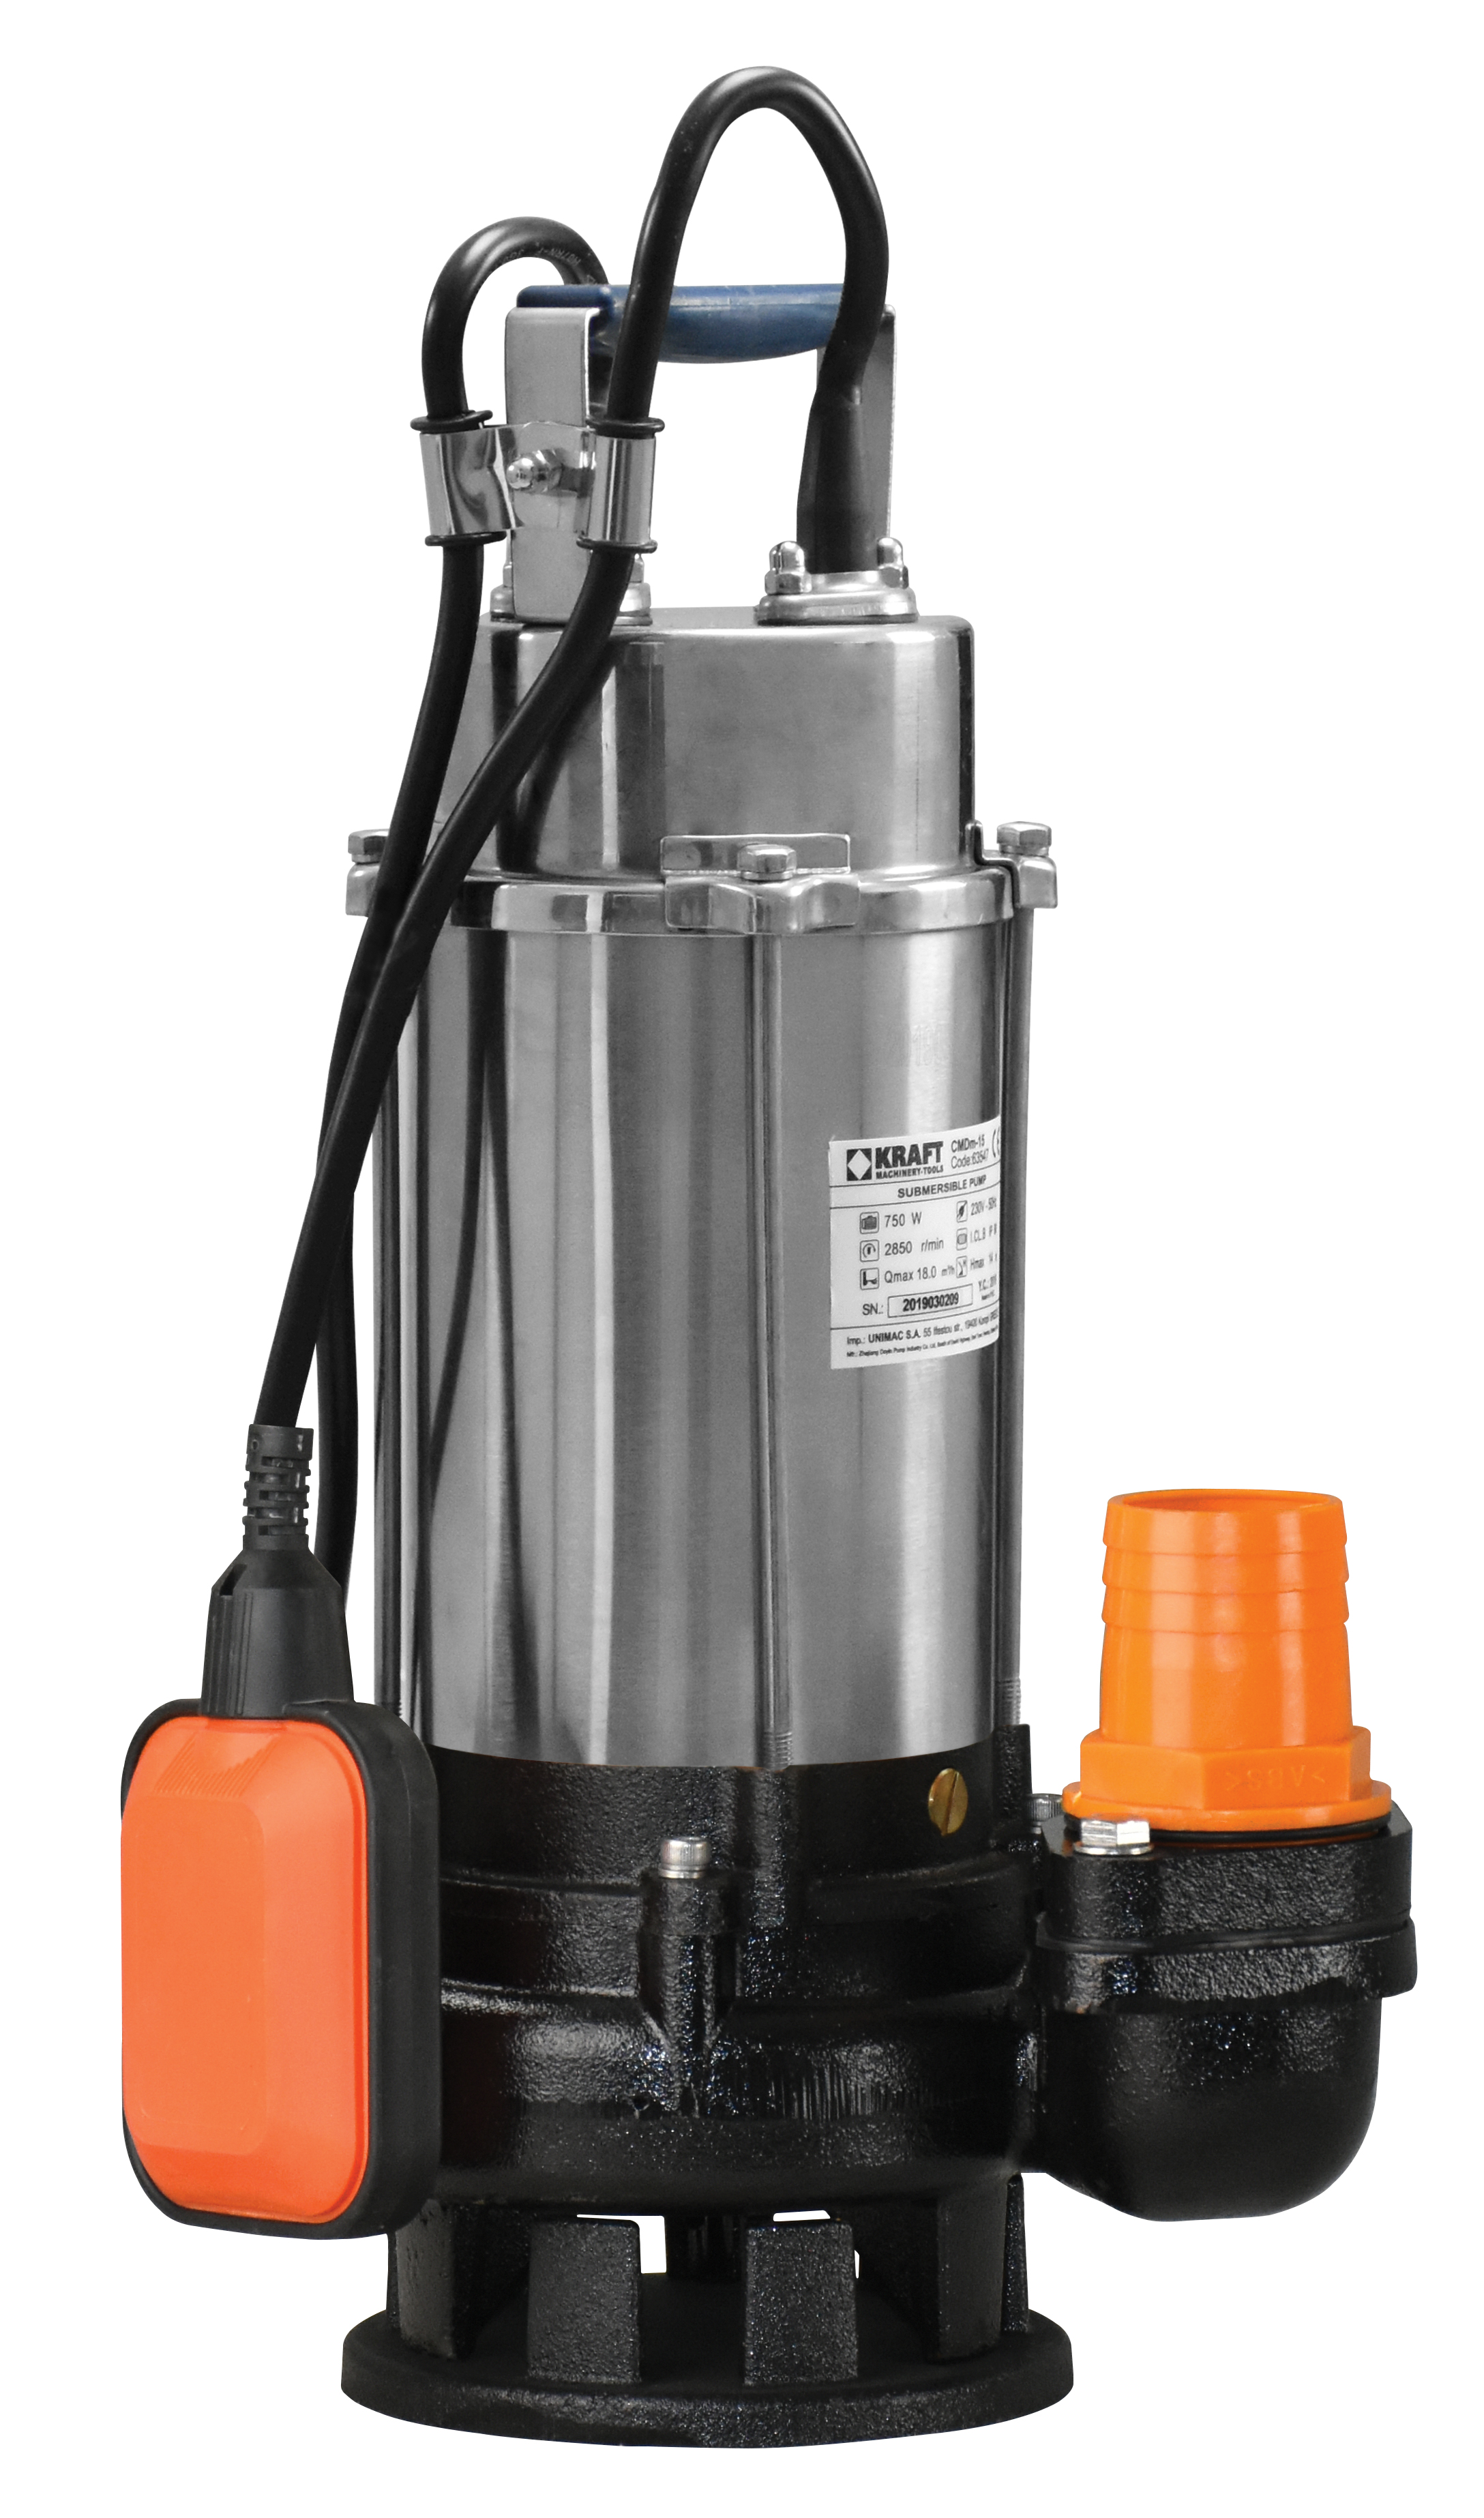 Submersible Wastewater Pump Inox 1500W KSS-200 Kraft